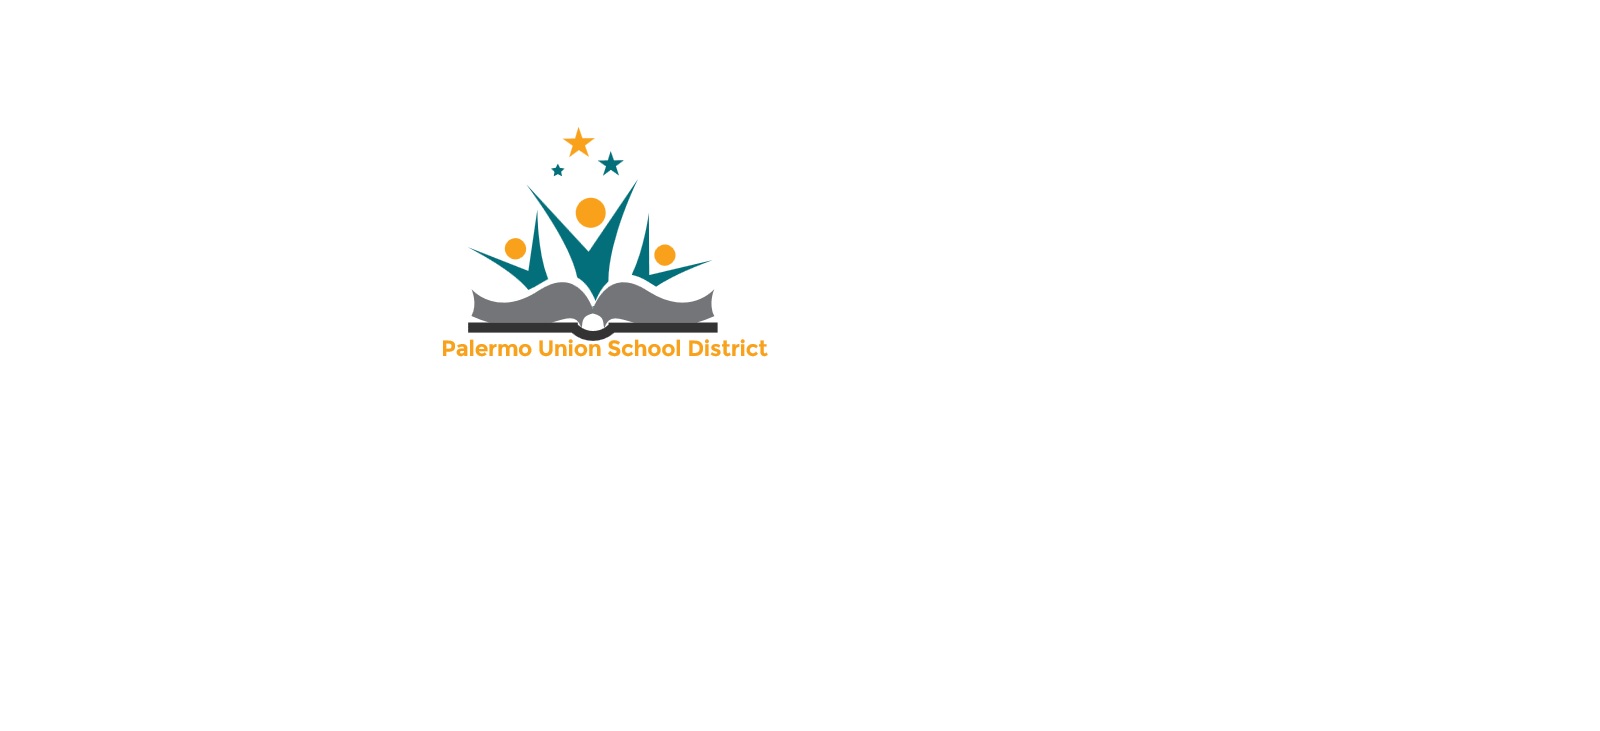 Palermo Union Elementary Logo